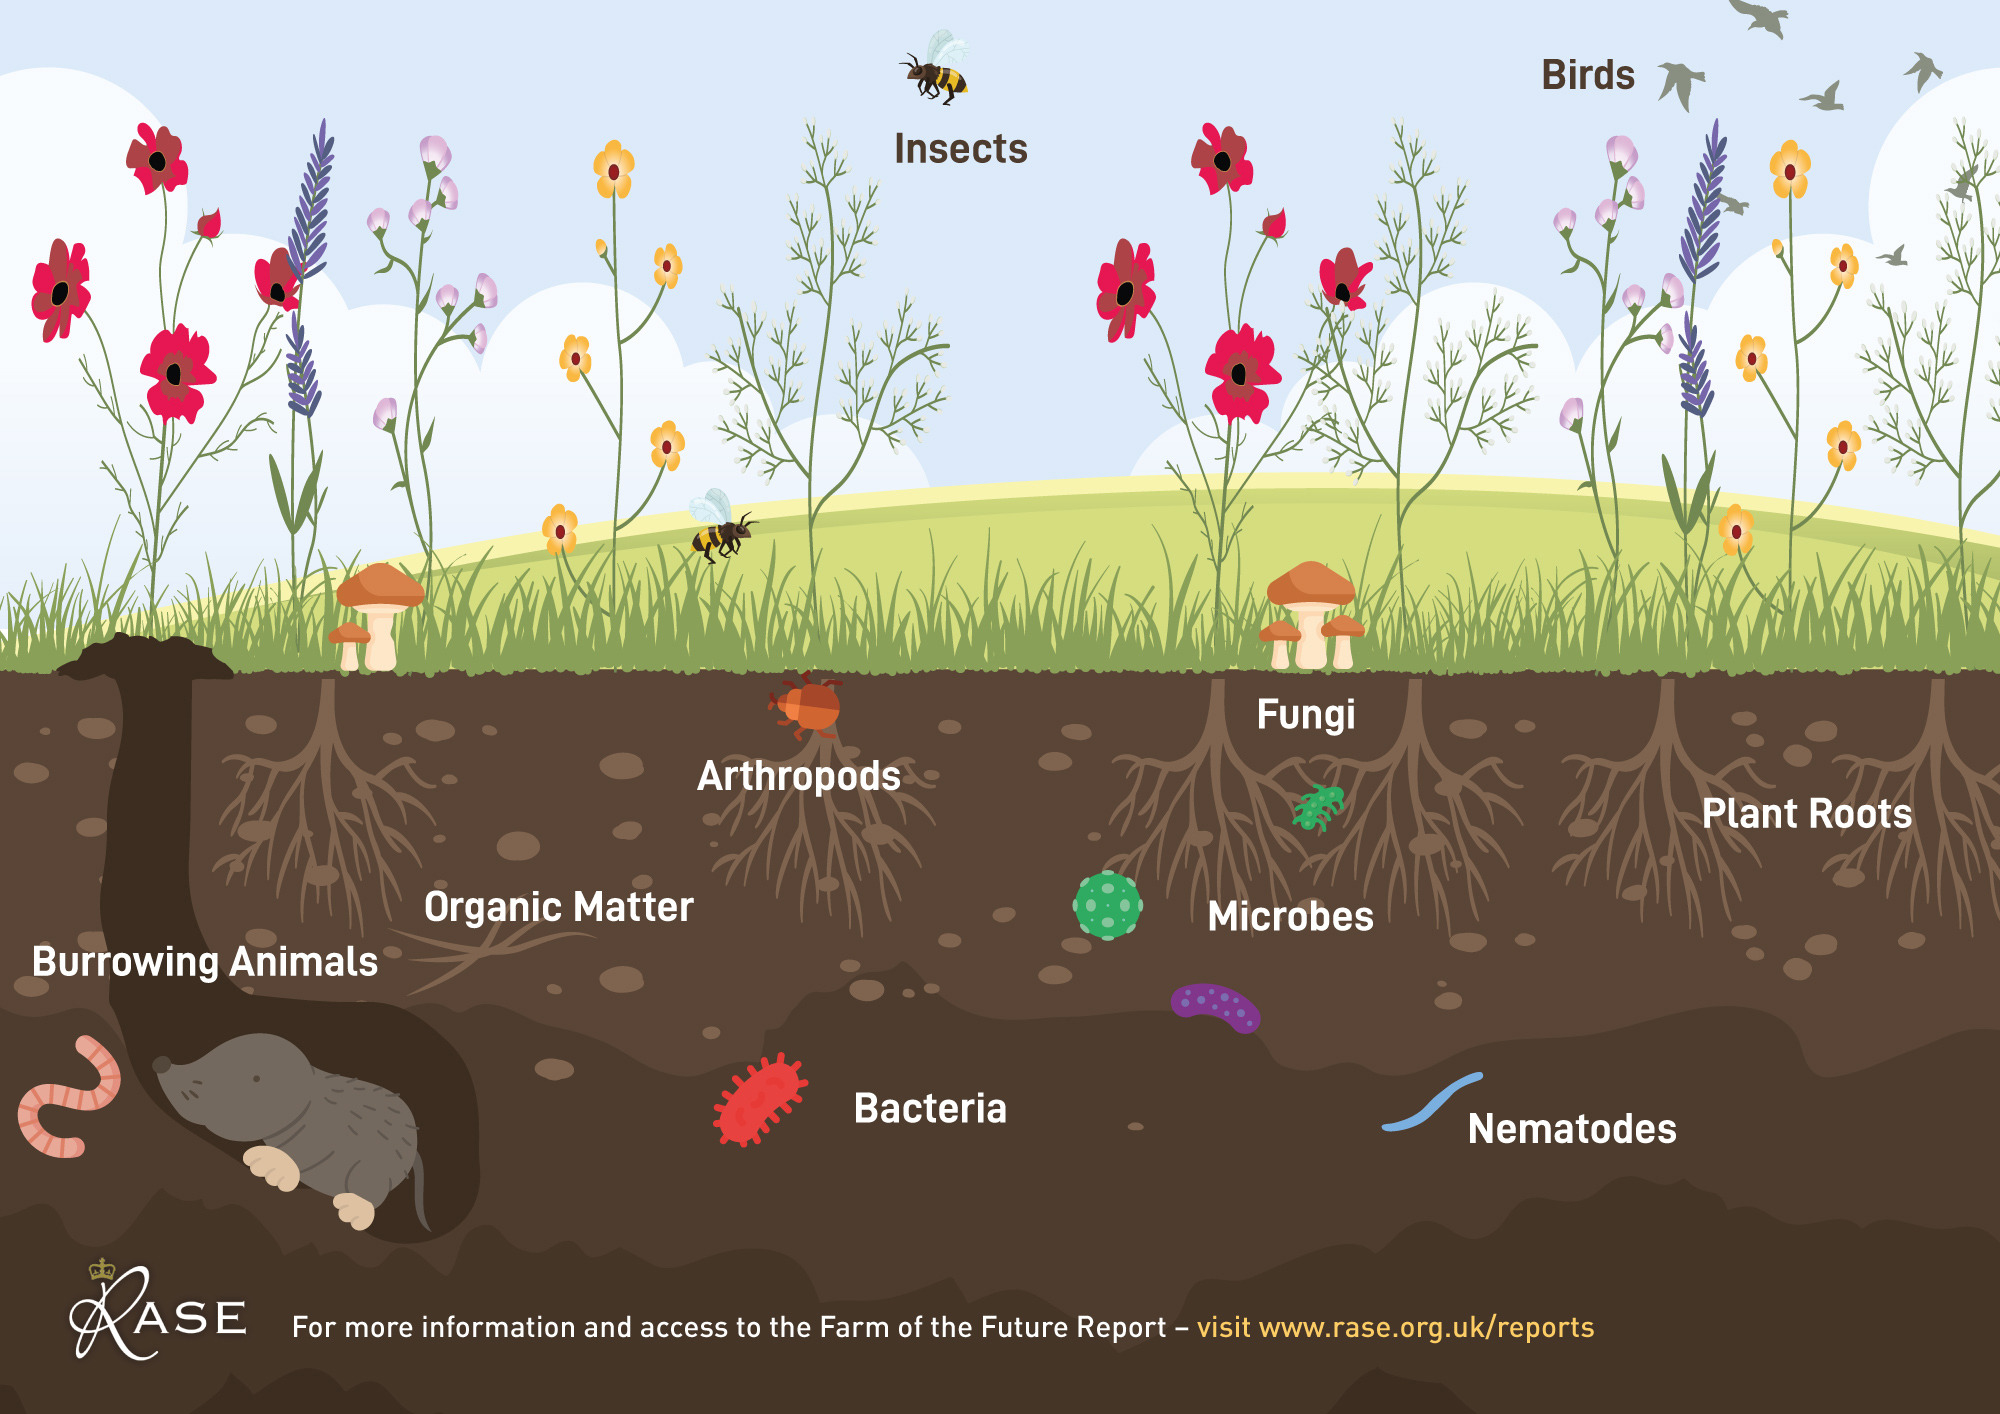 Soil biology and diverse landscapes